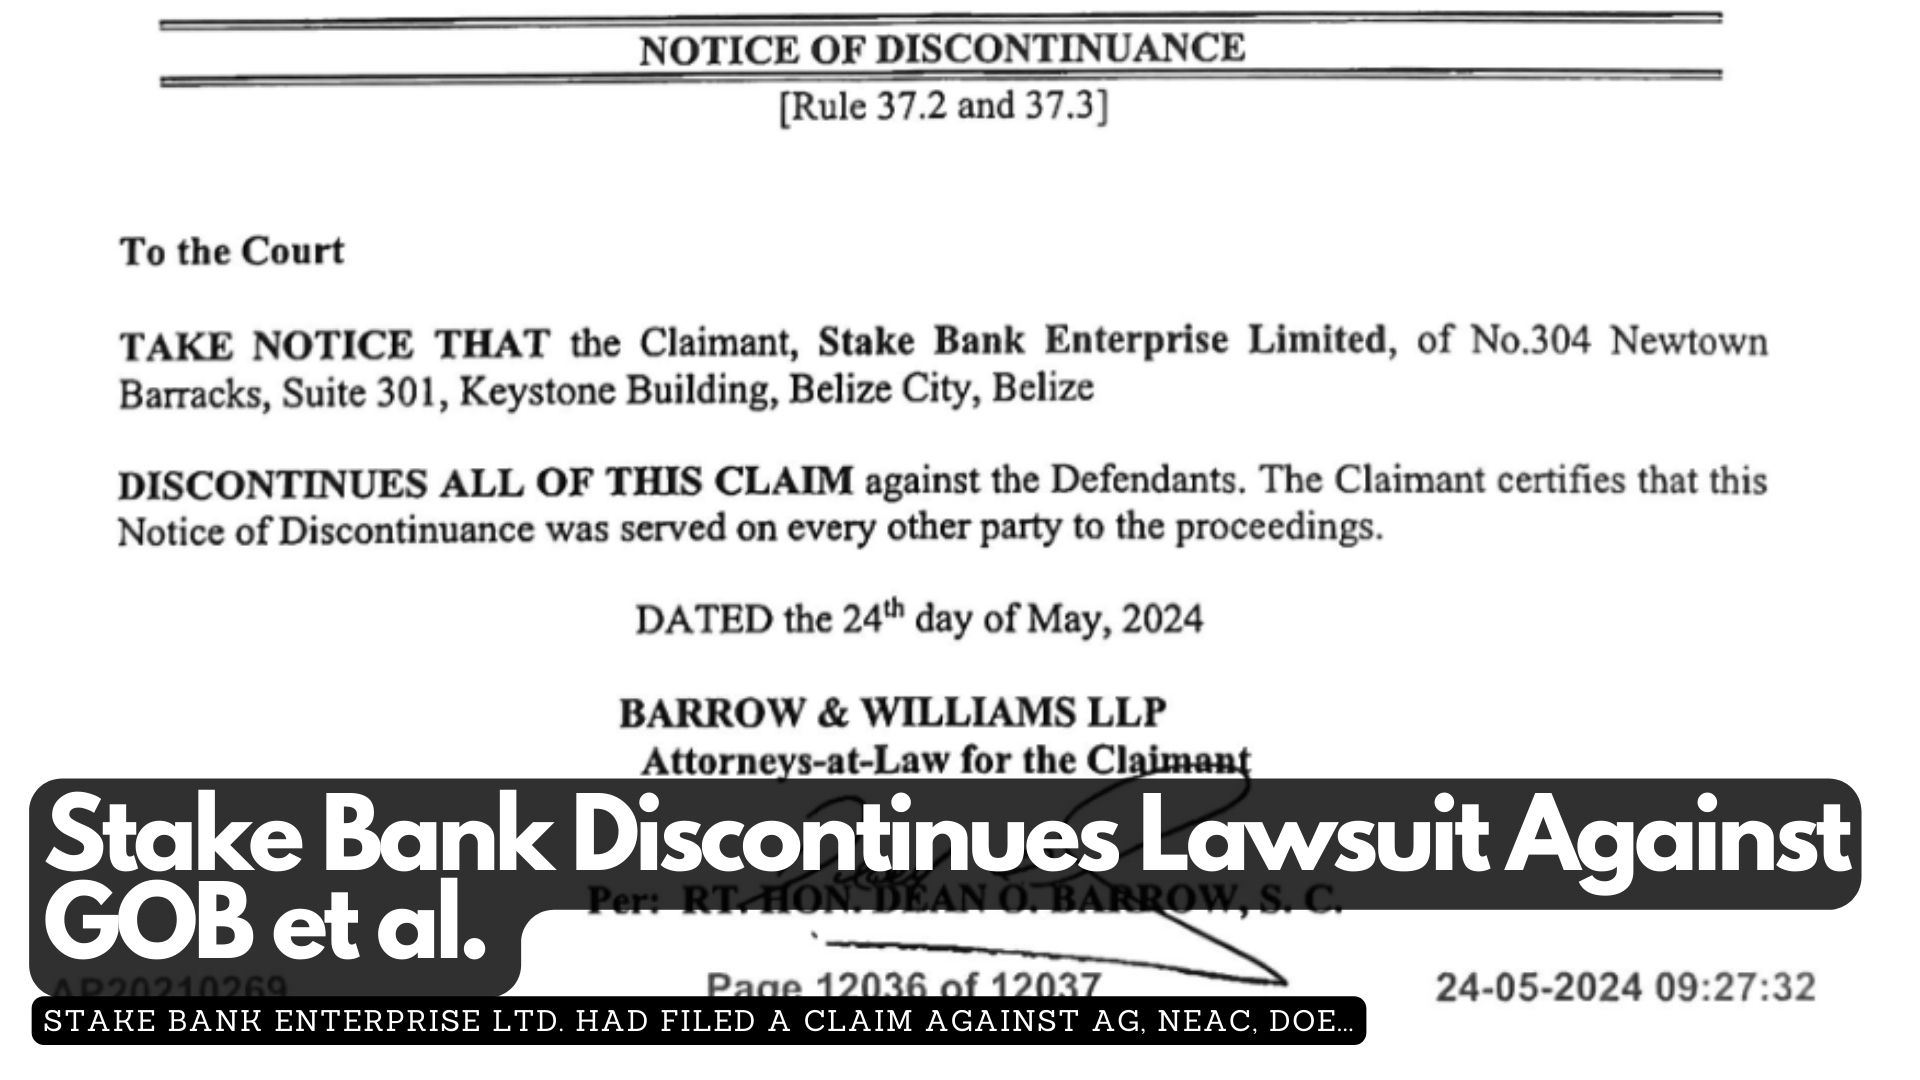 Stake Bank Discontinues Lawsuit Against GOB et al. 